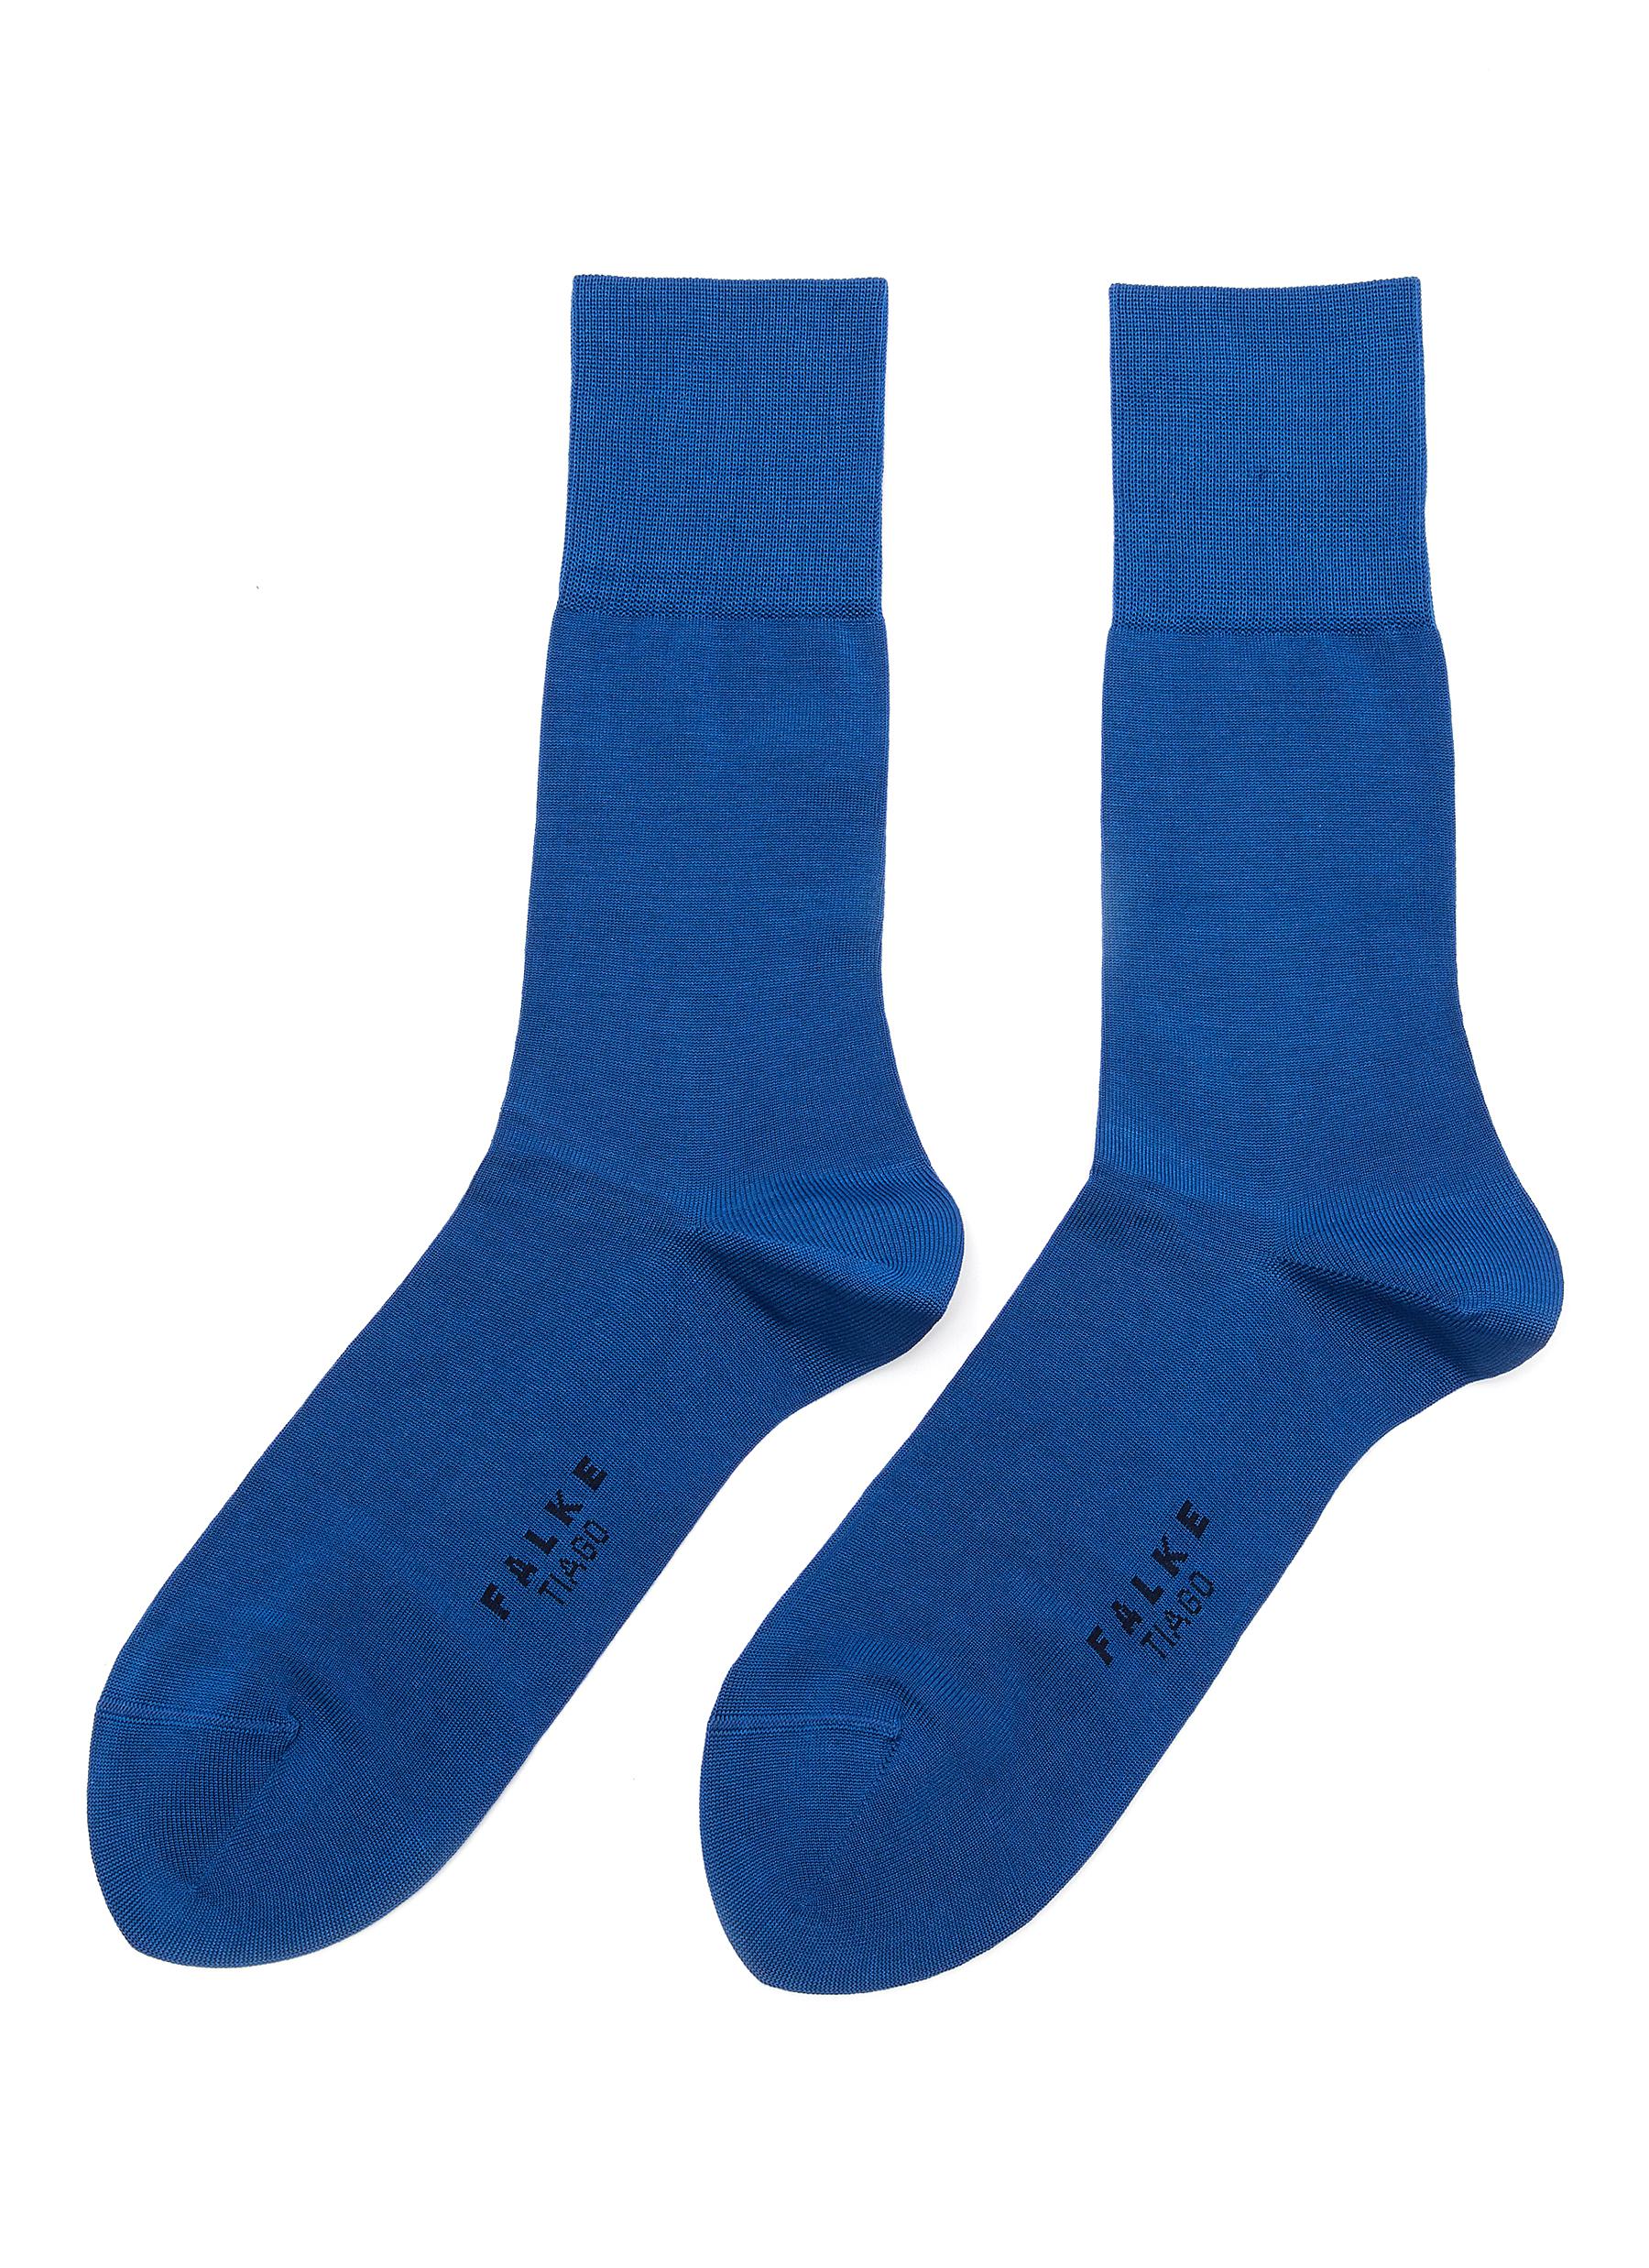 'Tiago' cotton socks